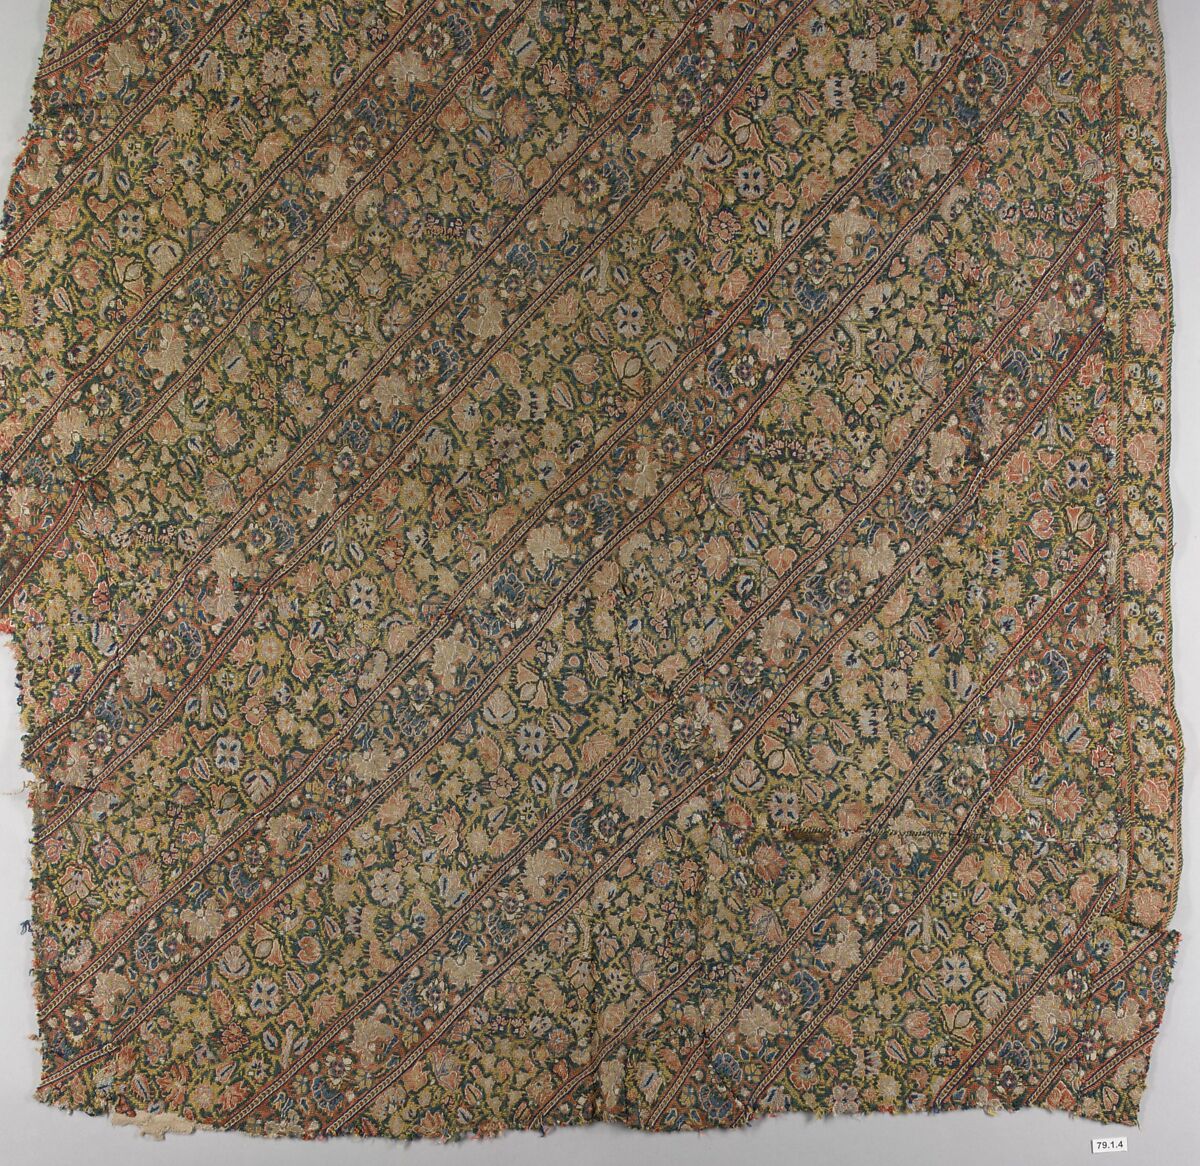 Textile Fragment, Linen (?), silk; embroidered 